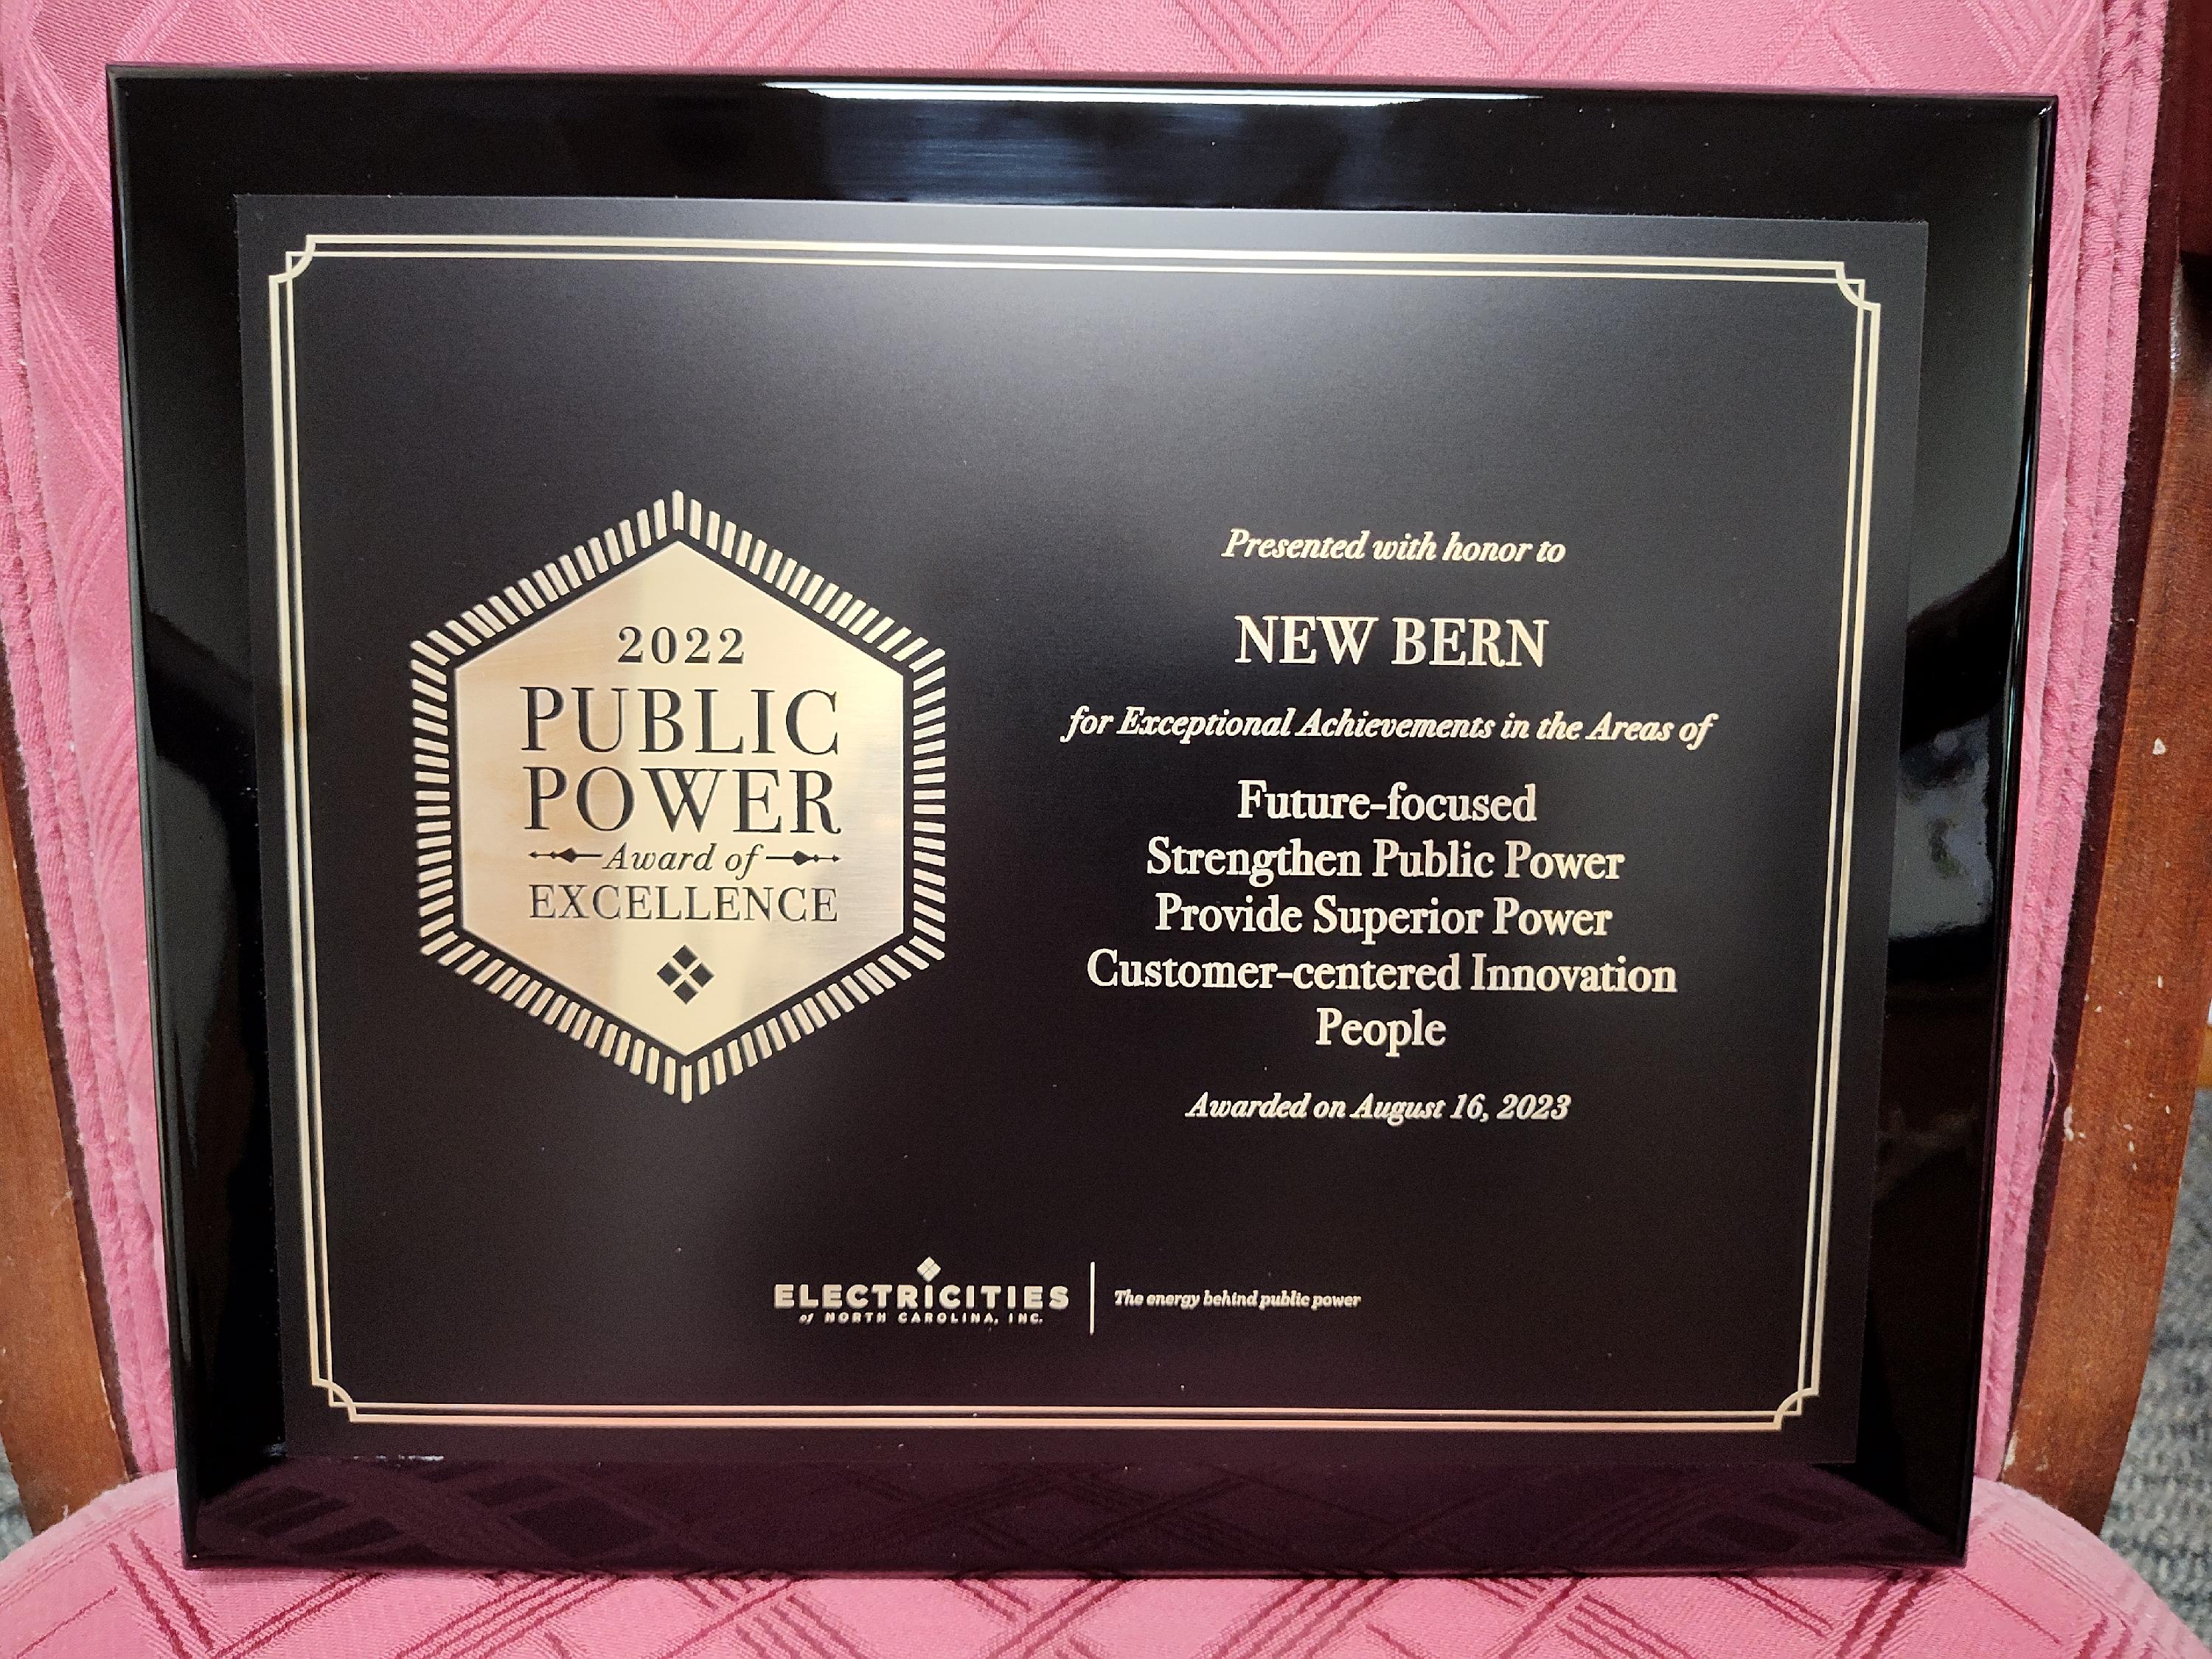 Public Power Award of Excellence